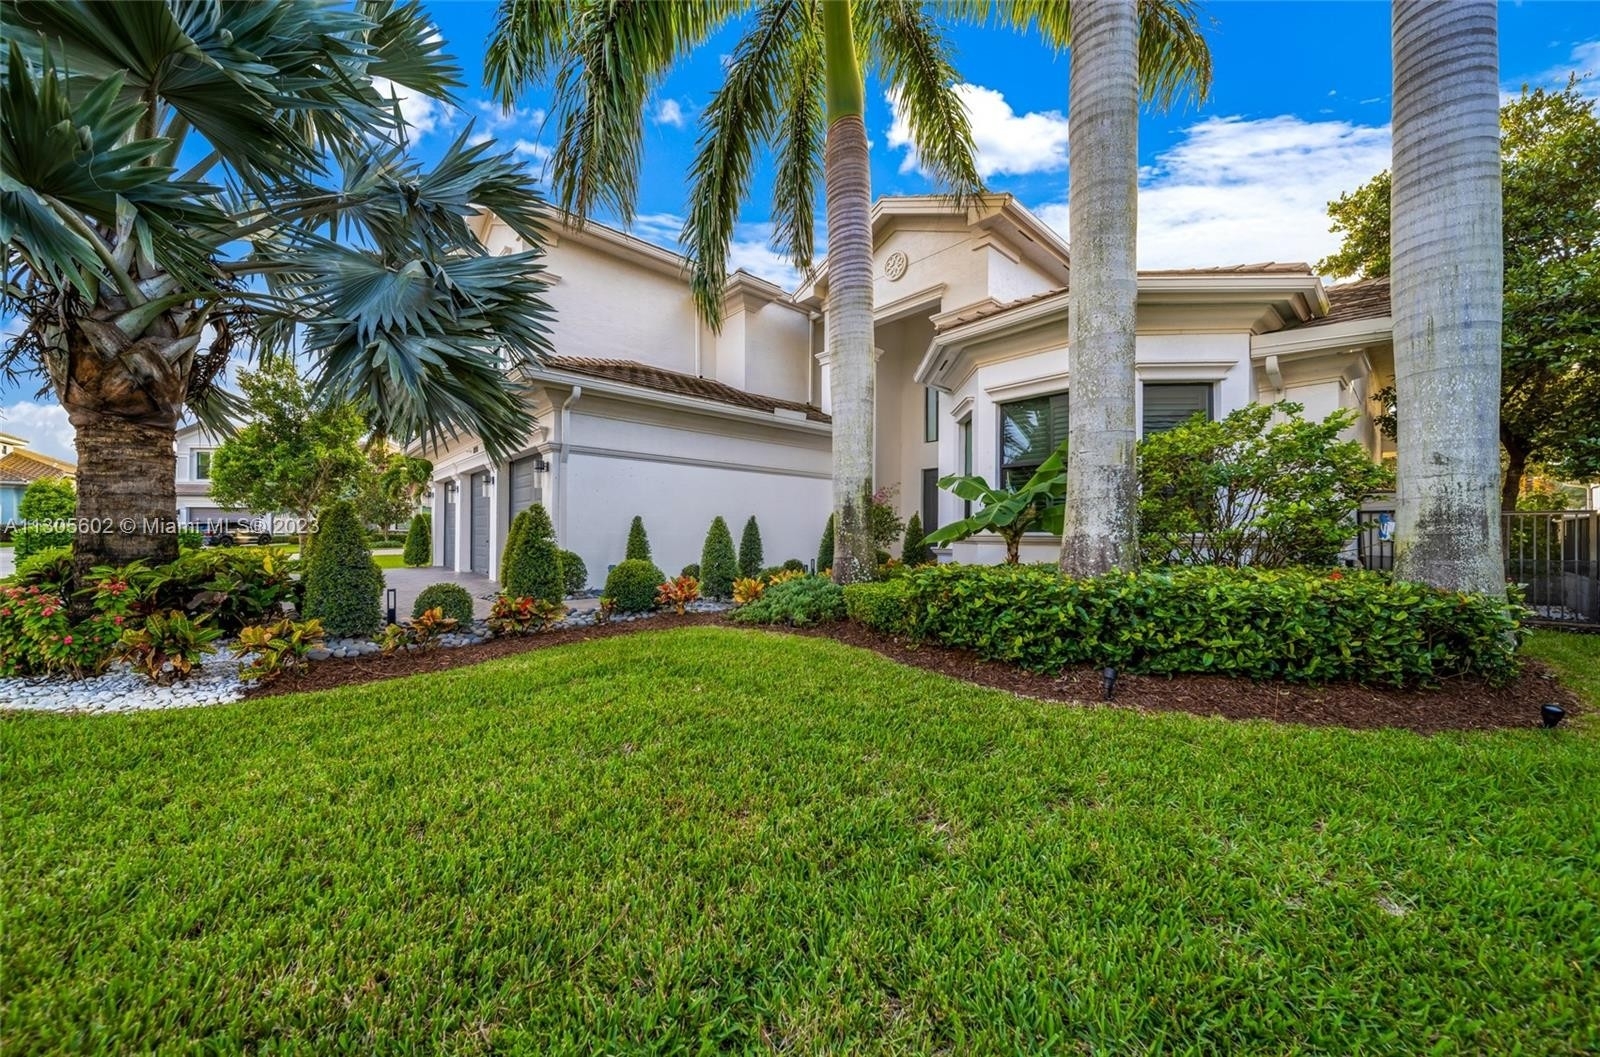 Property at Delray Beach, FL 33446